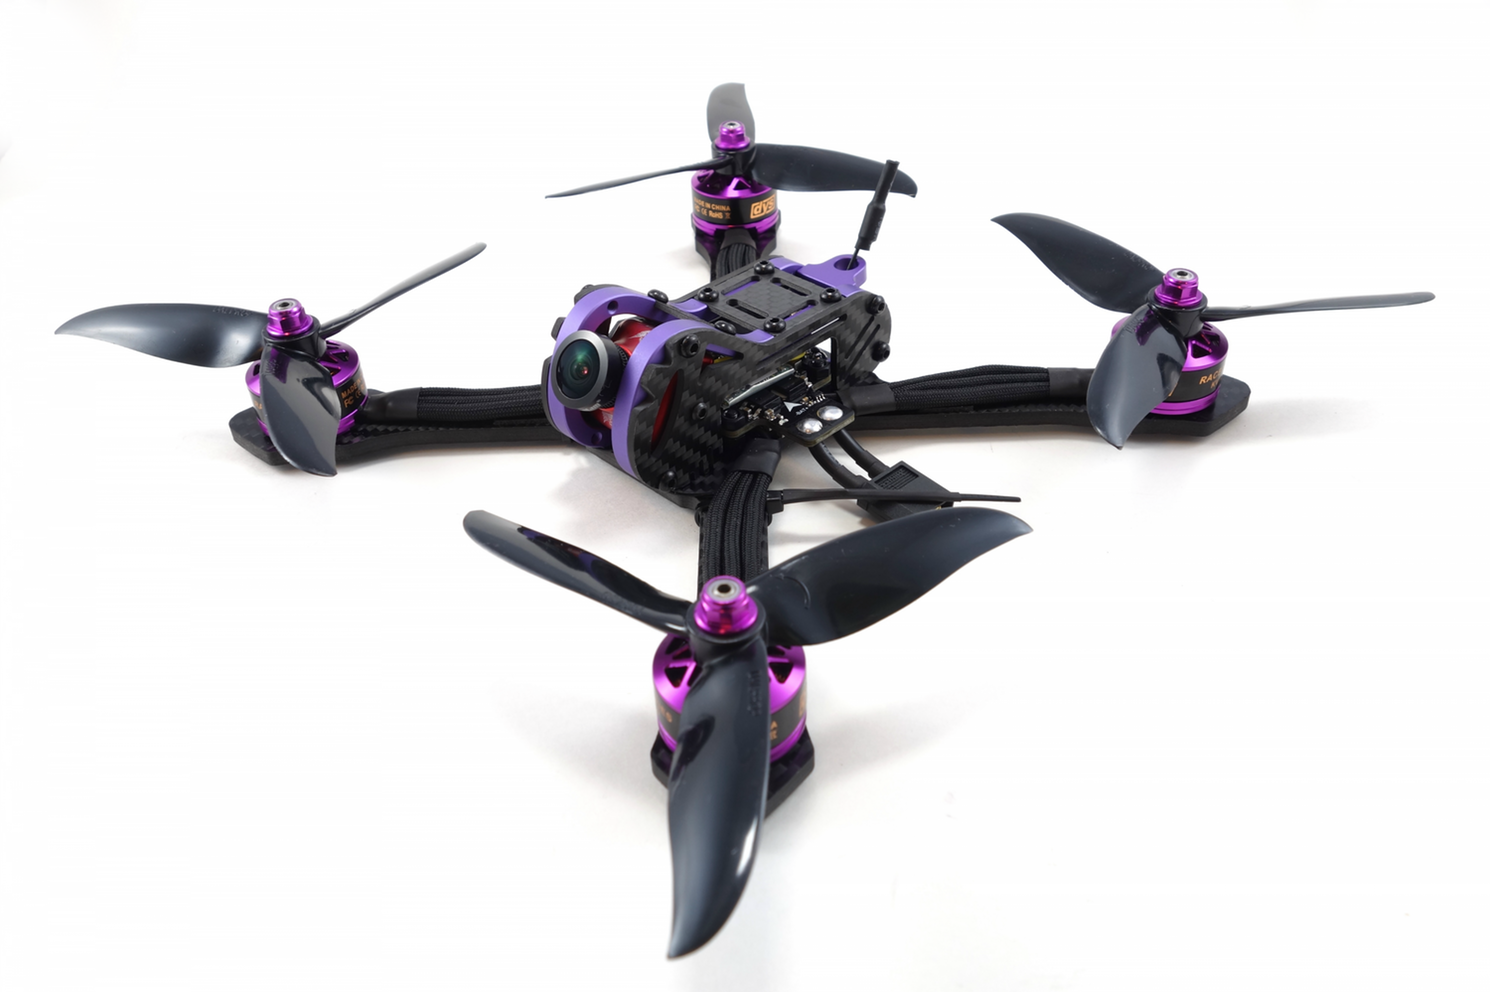 Building racing drones made me a better designer